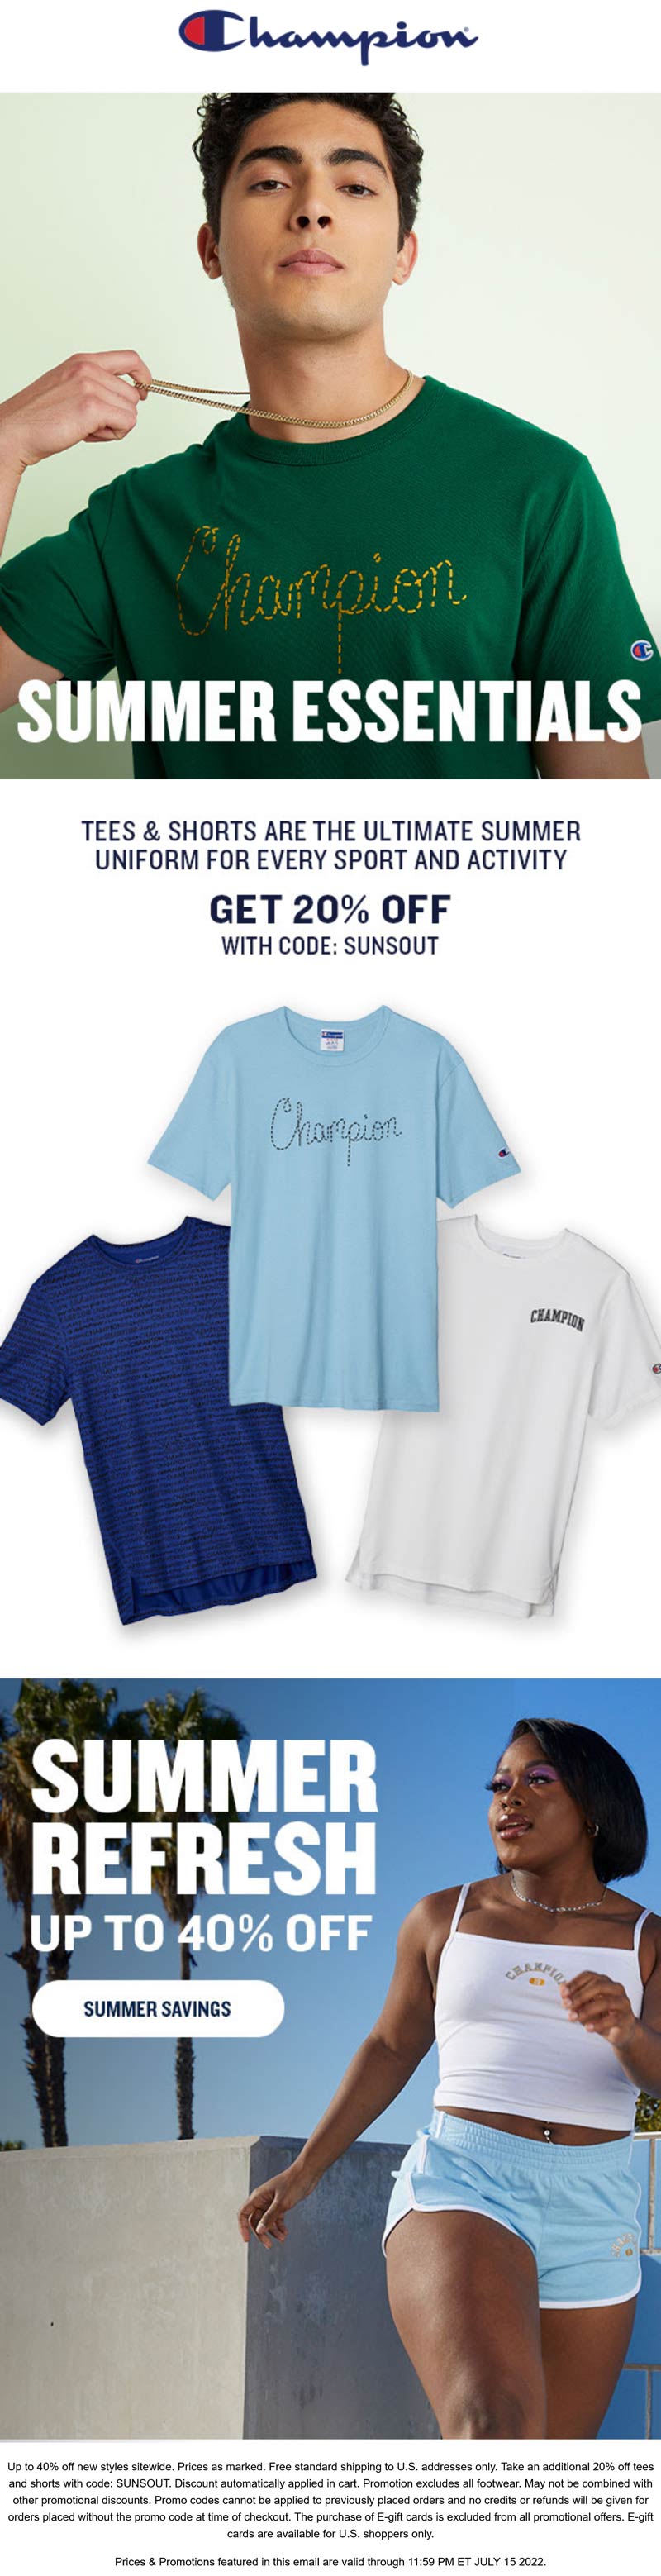 Champion stores Coupon  20% off tees & shorts today at Champion via promo code SUNSOUT #champion 